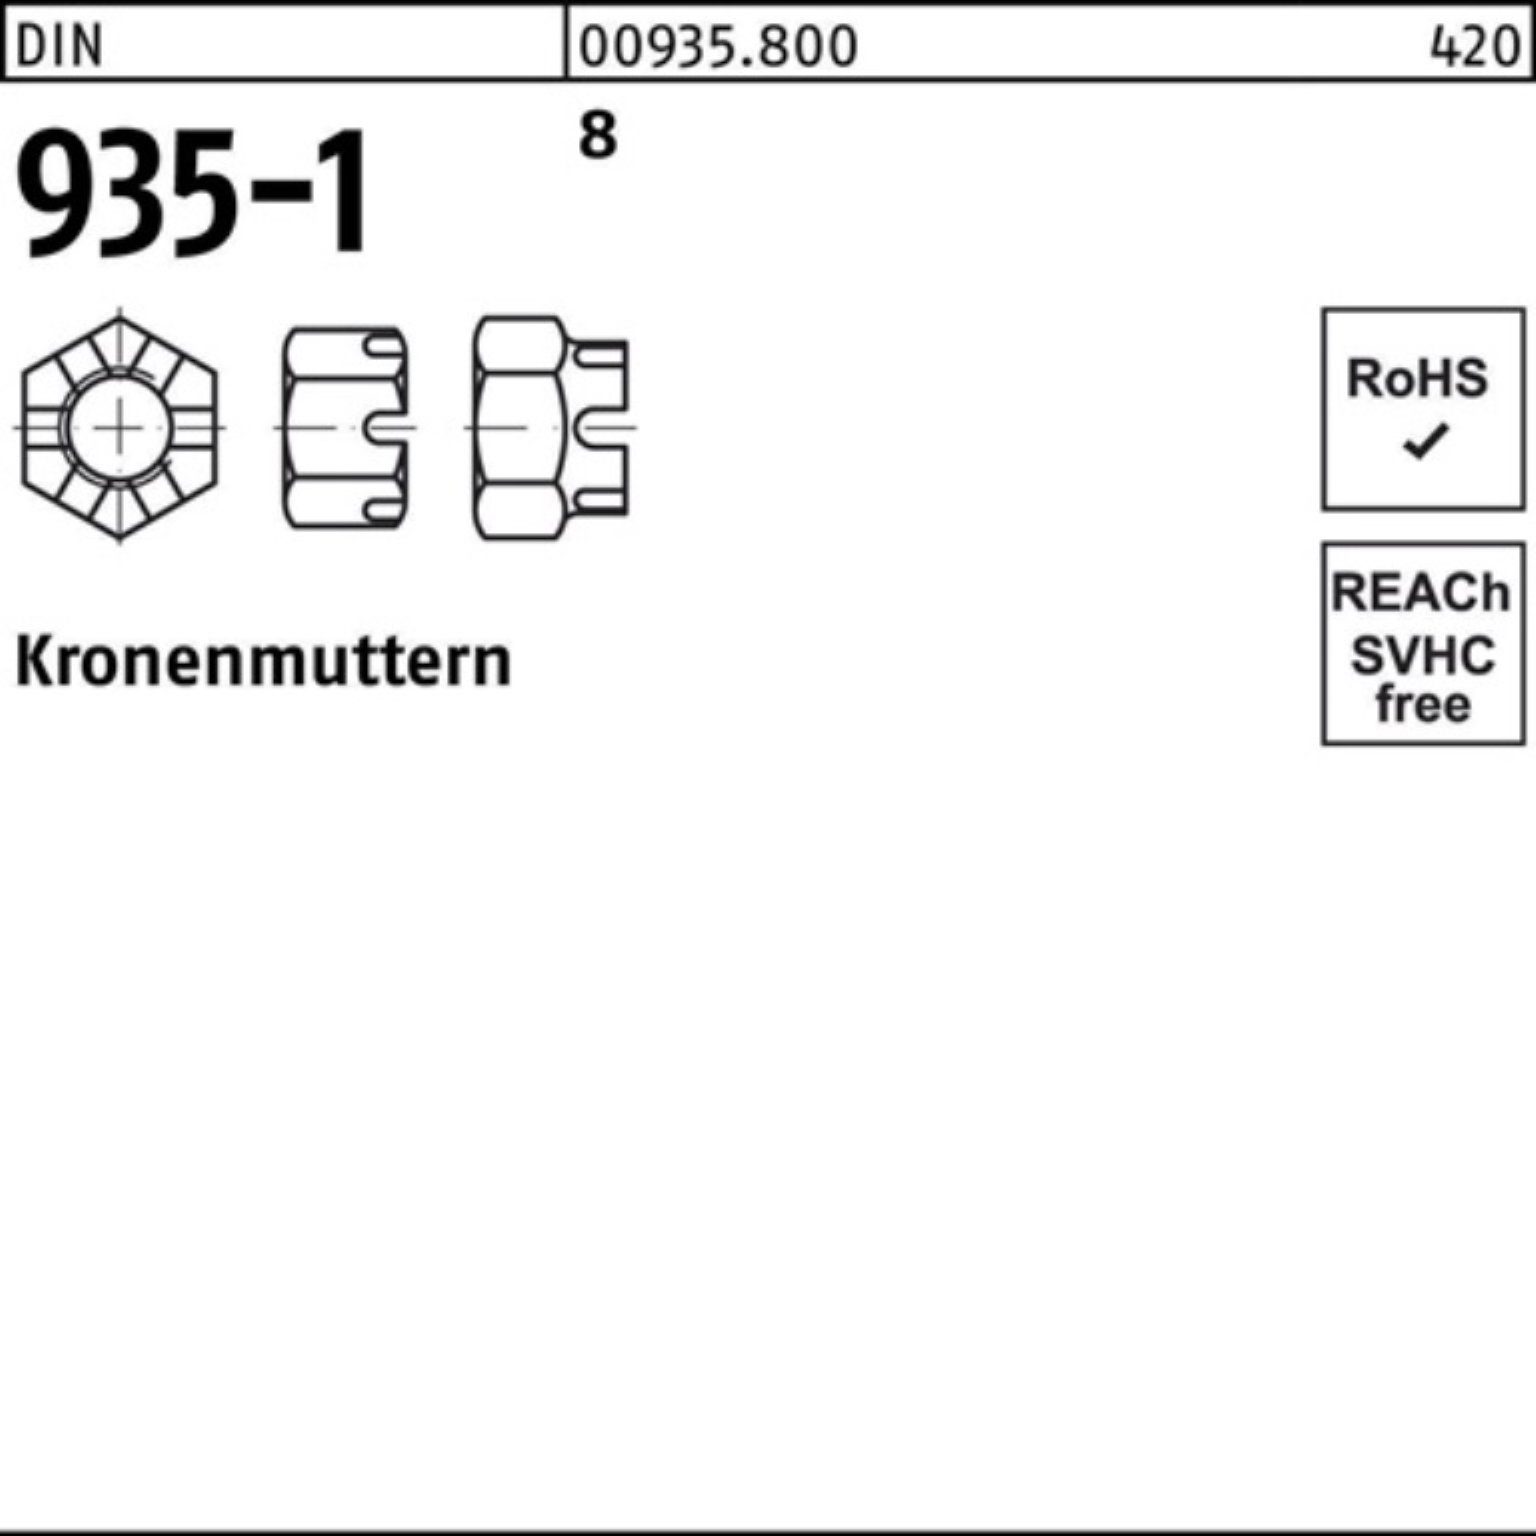 935-1 25 Reyher Kronenmutter M24 Stück Pack 935-1 DIN 8 8 Kronenmu Kronenmutter 100er DIN